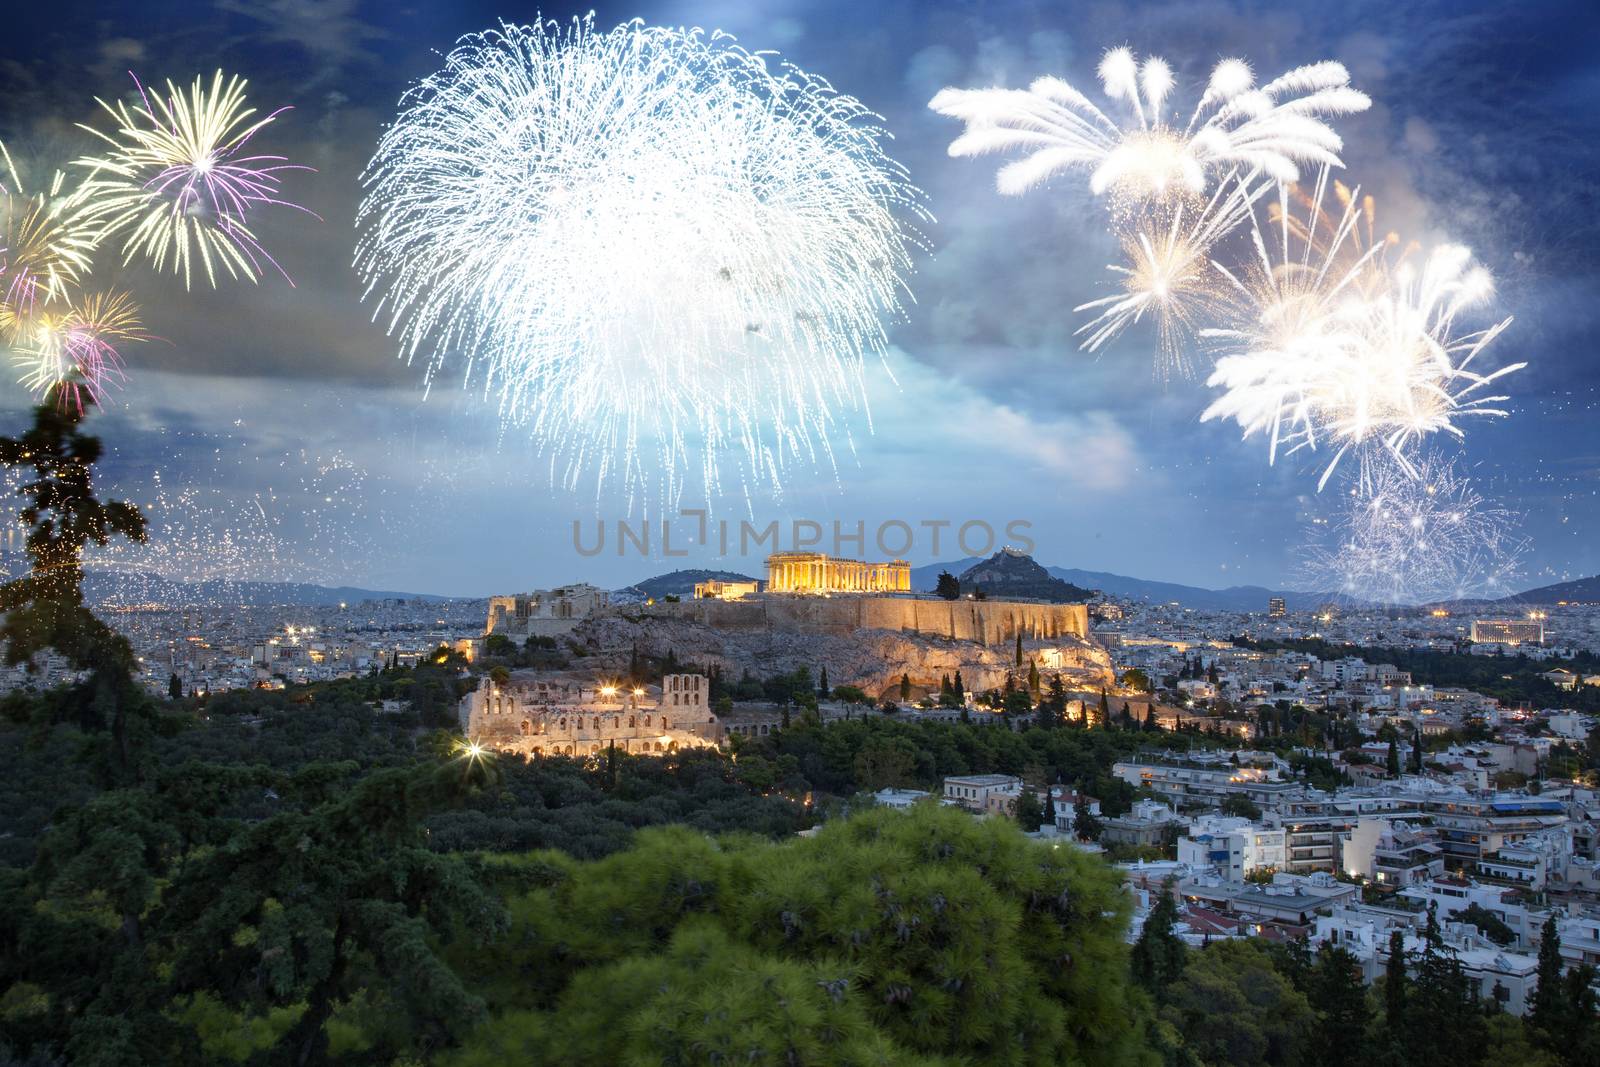 fireworks over Athens, Acropolis and the Parthenon, Attica, Greece - New Year destination